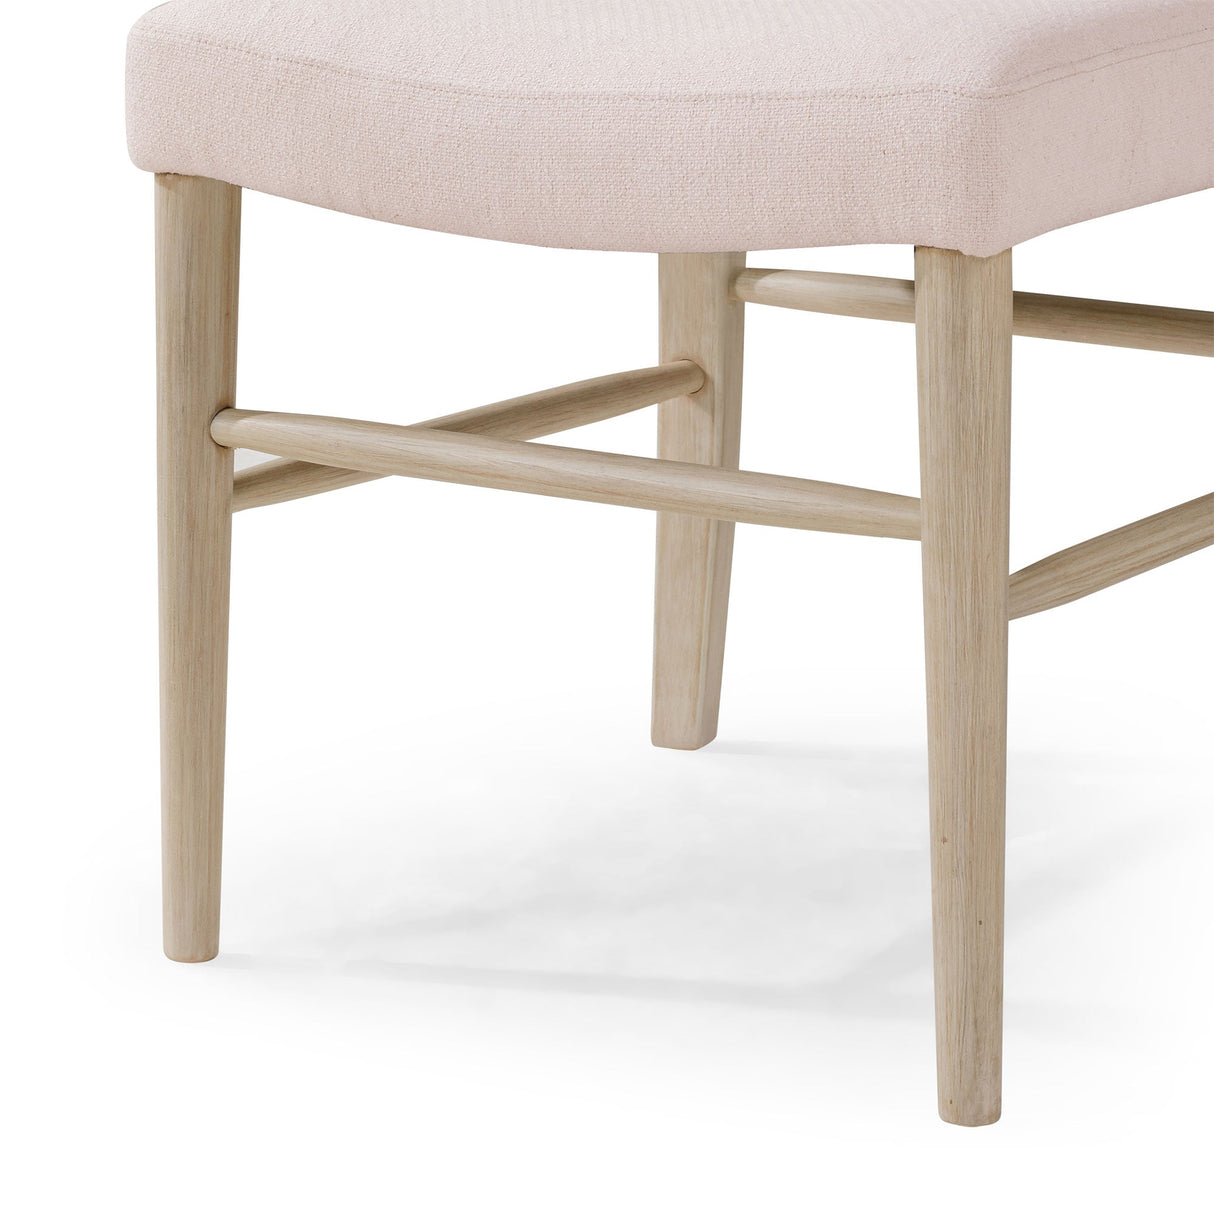 Maven Lane Vera Wood Dining Chair, Antique White & Cream Weave Fabric, Set of 2